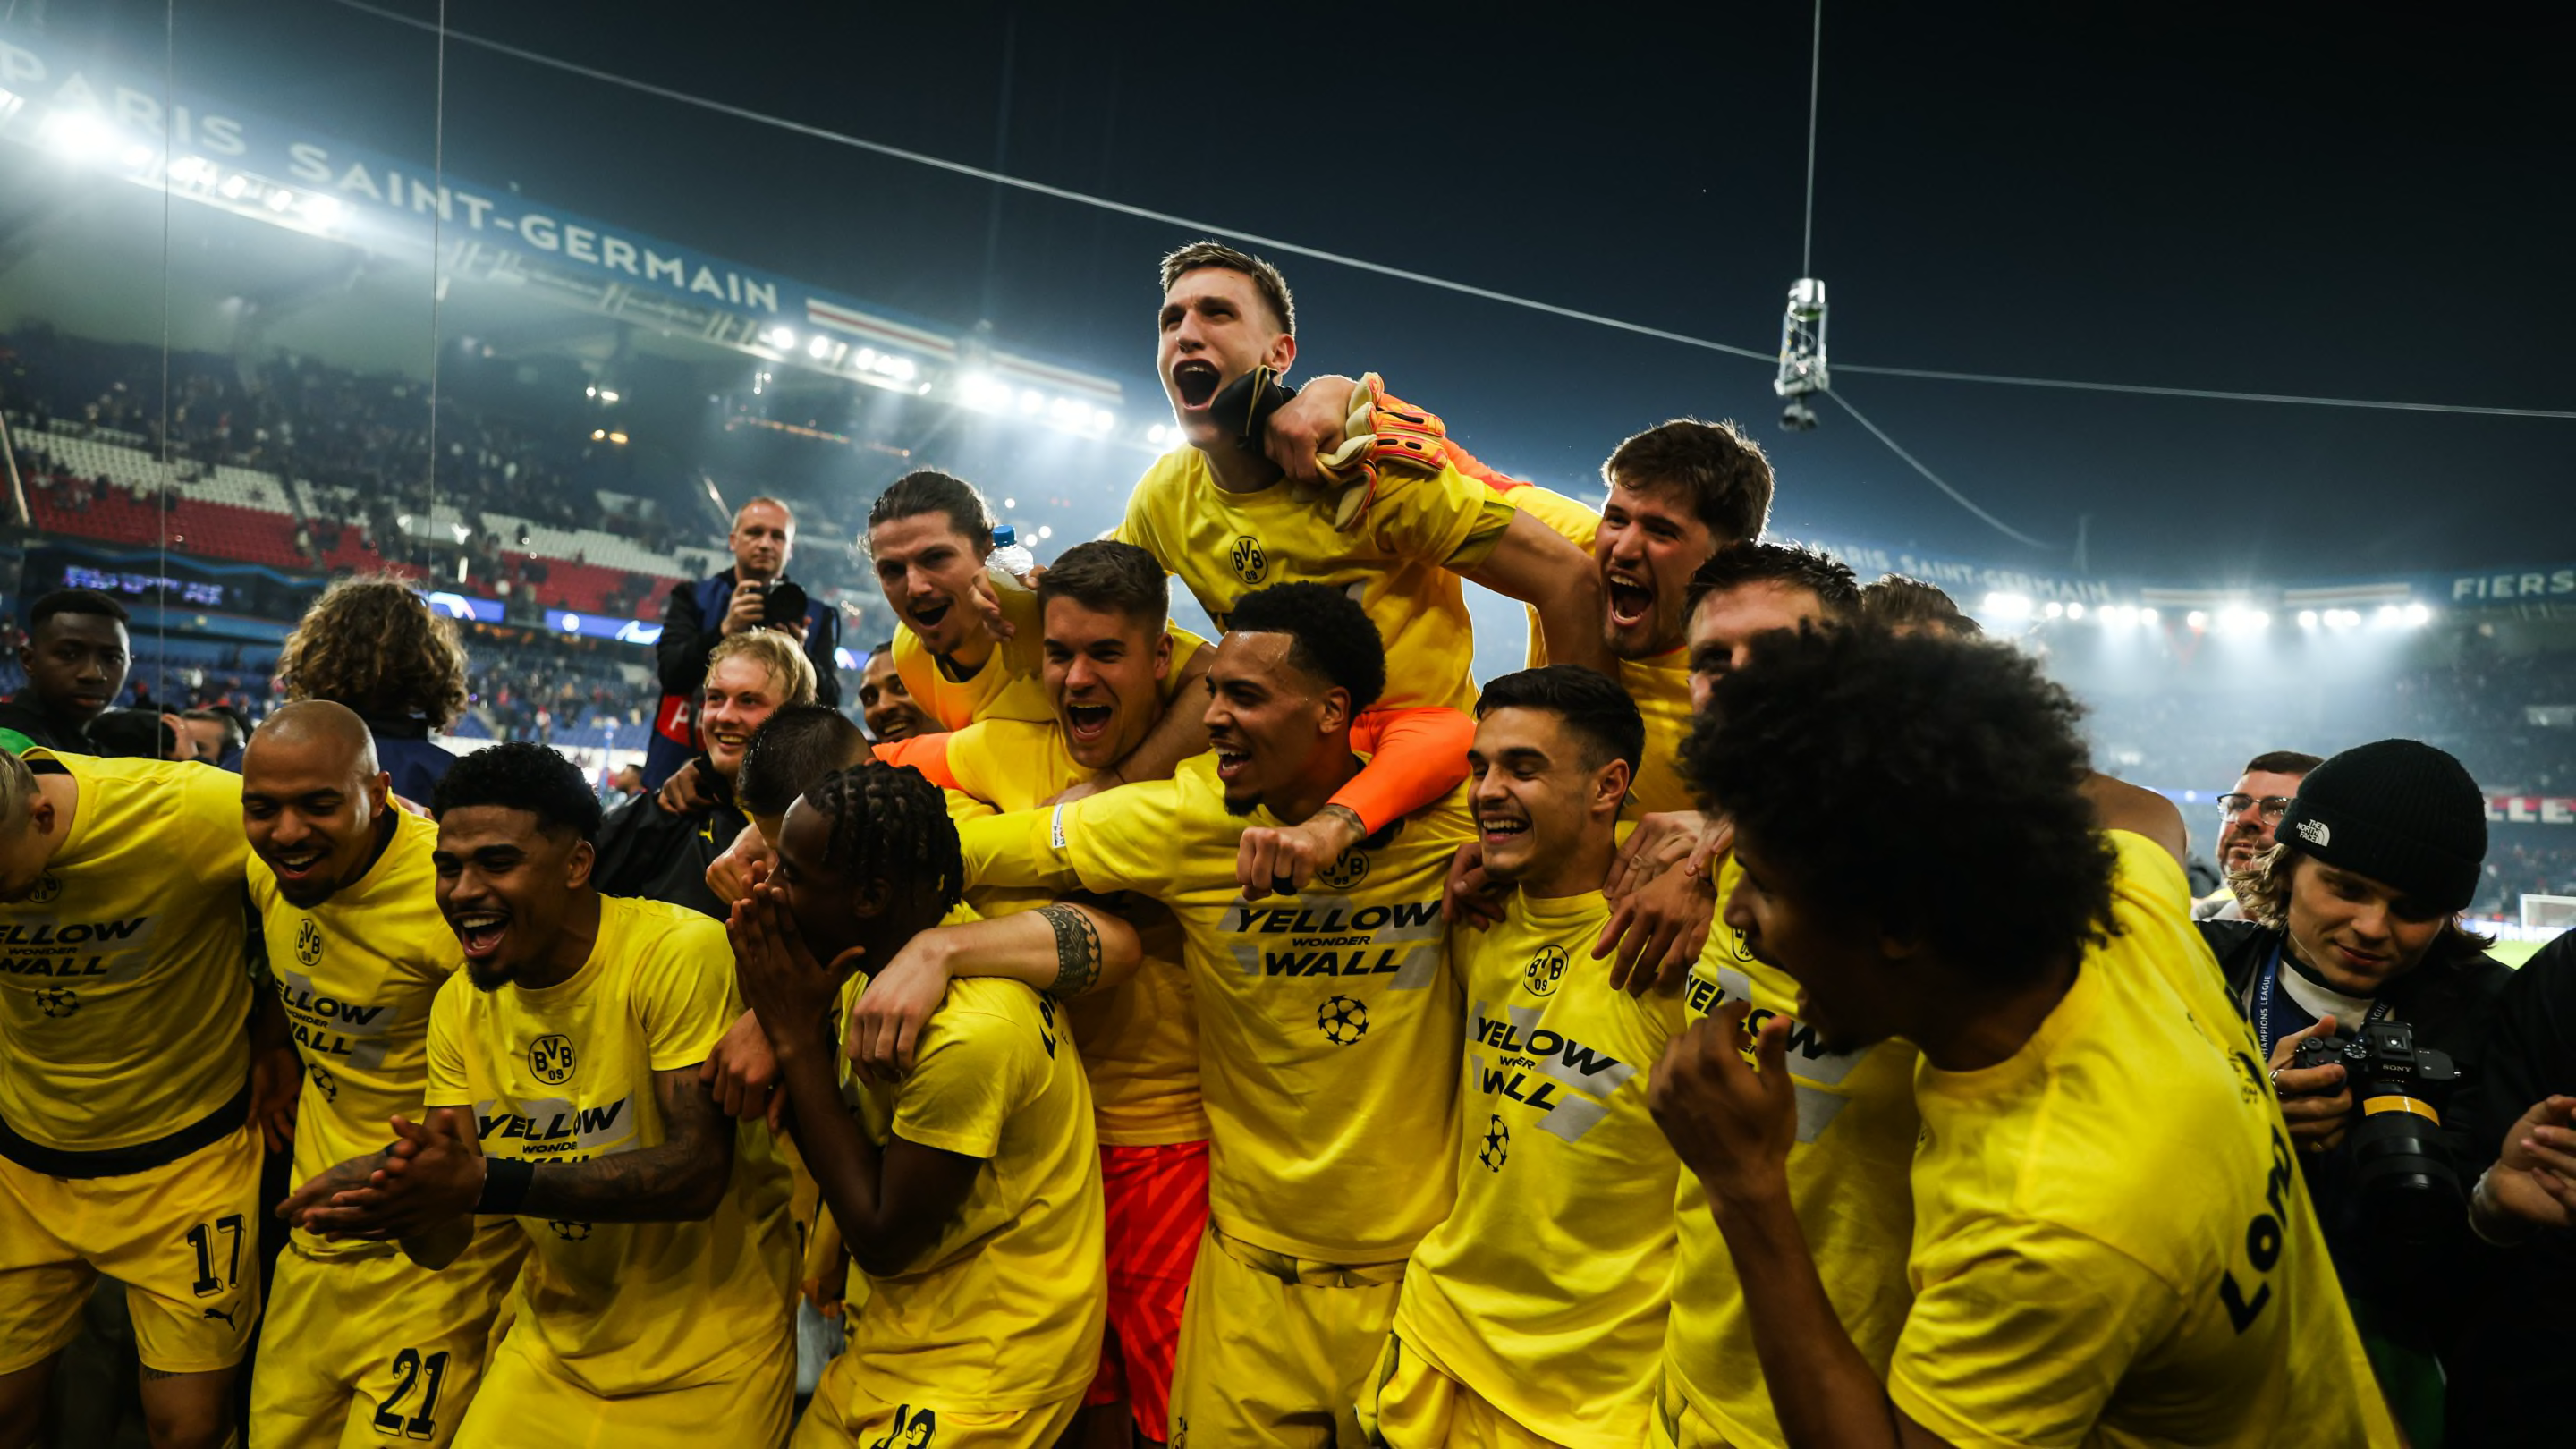 Borussia Dortmund's journey to the Champions League final